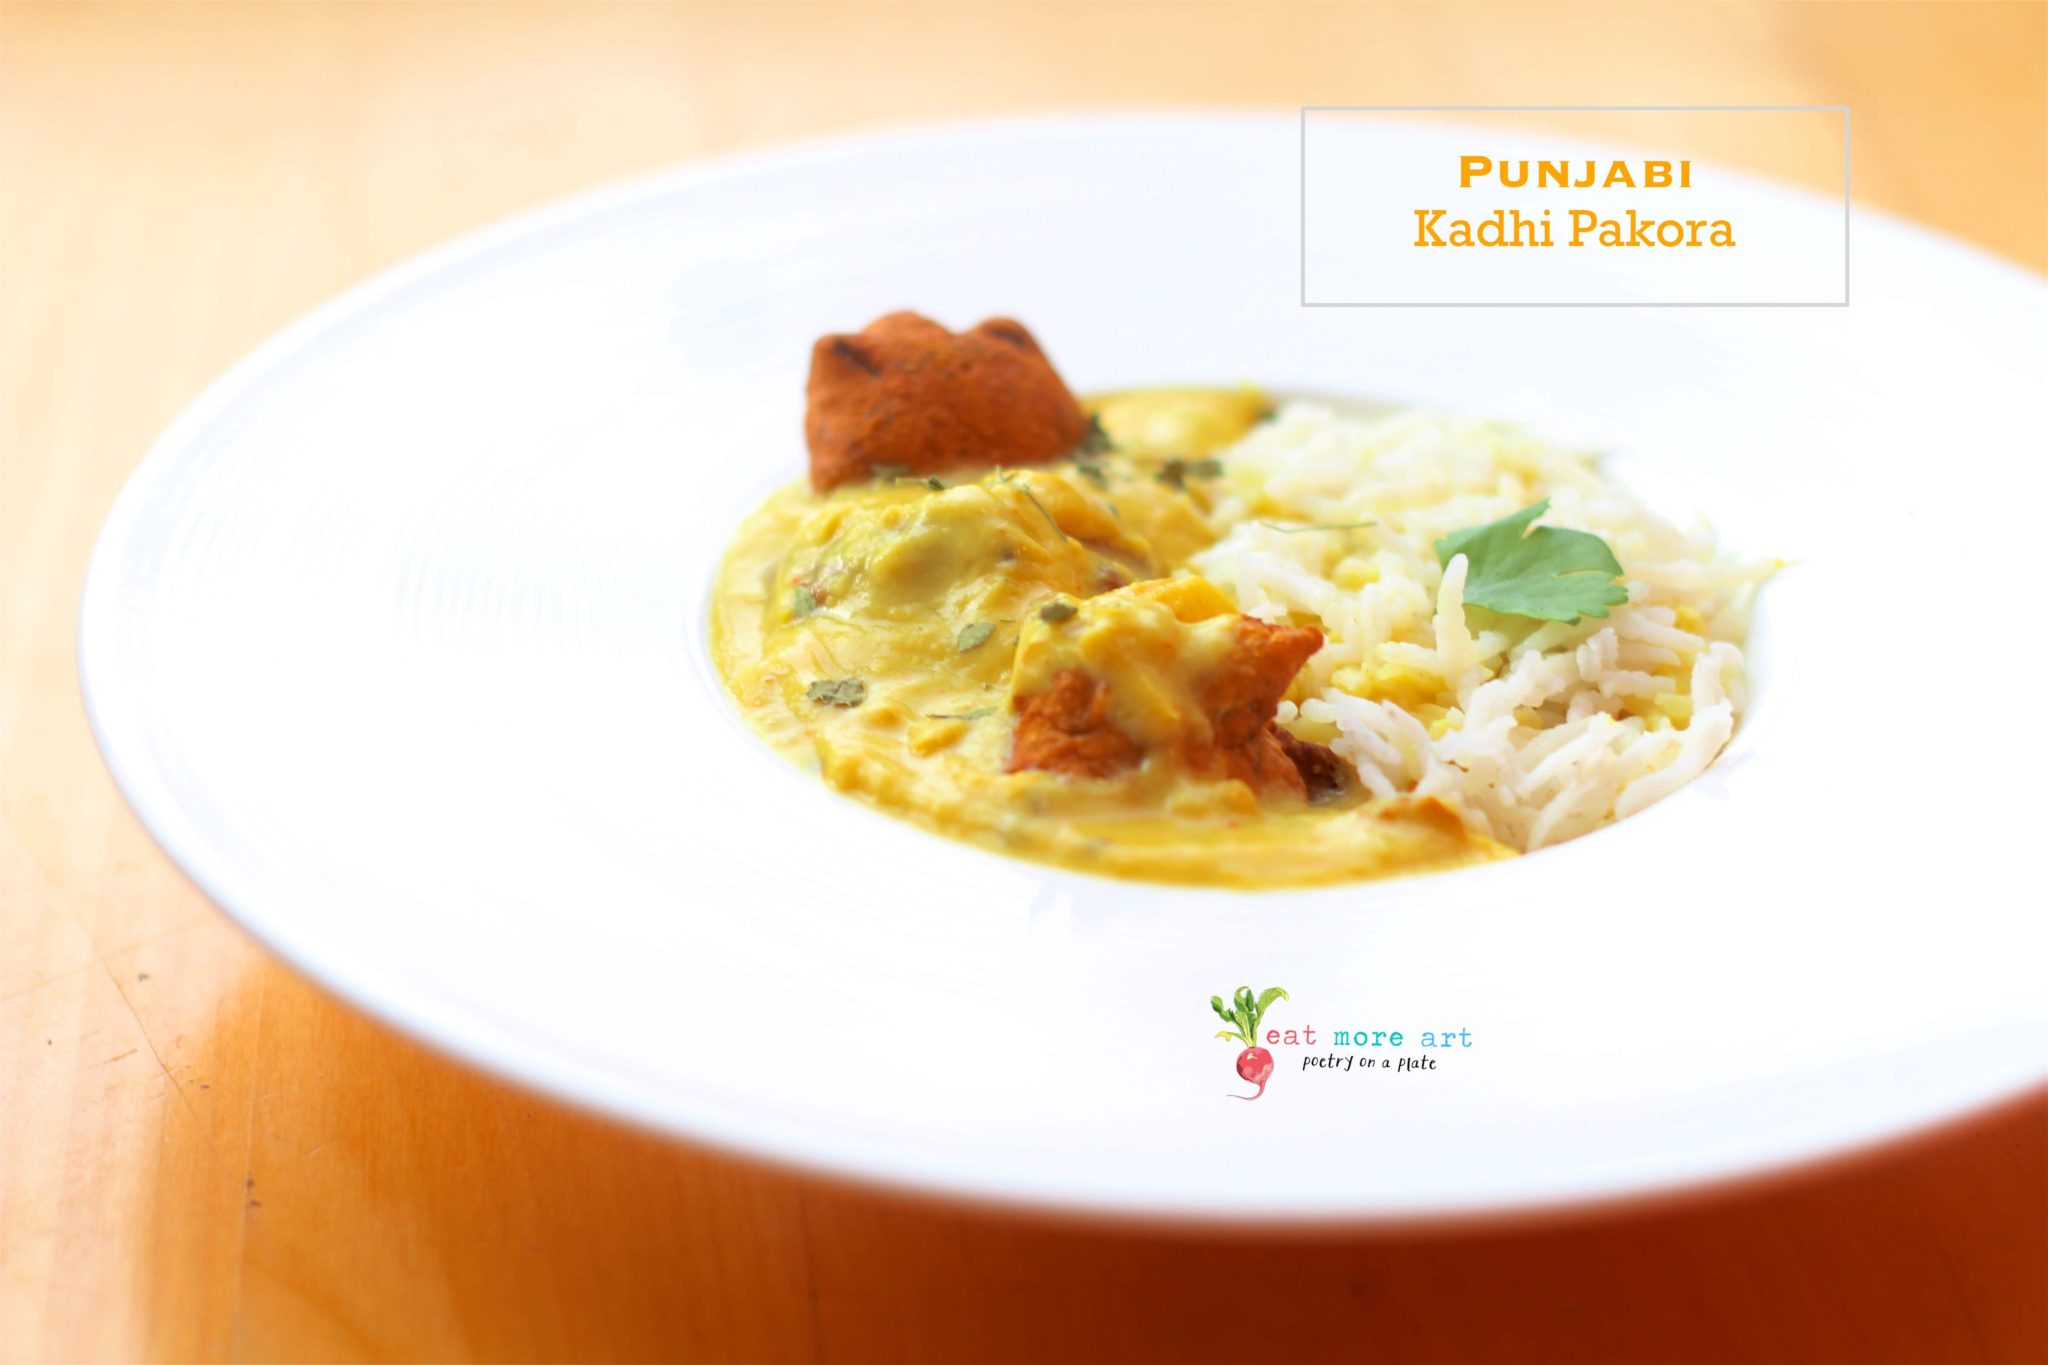 a plate of punjabi kadhi pakora